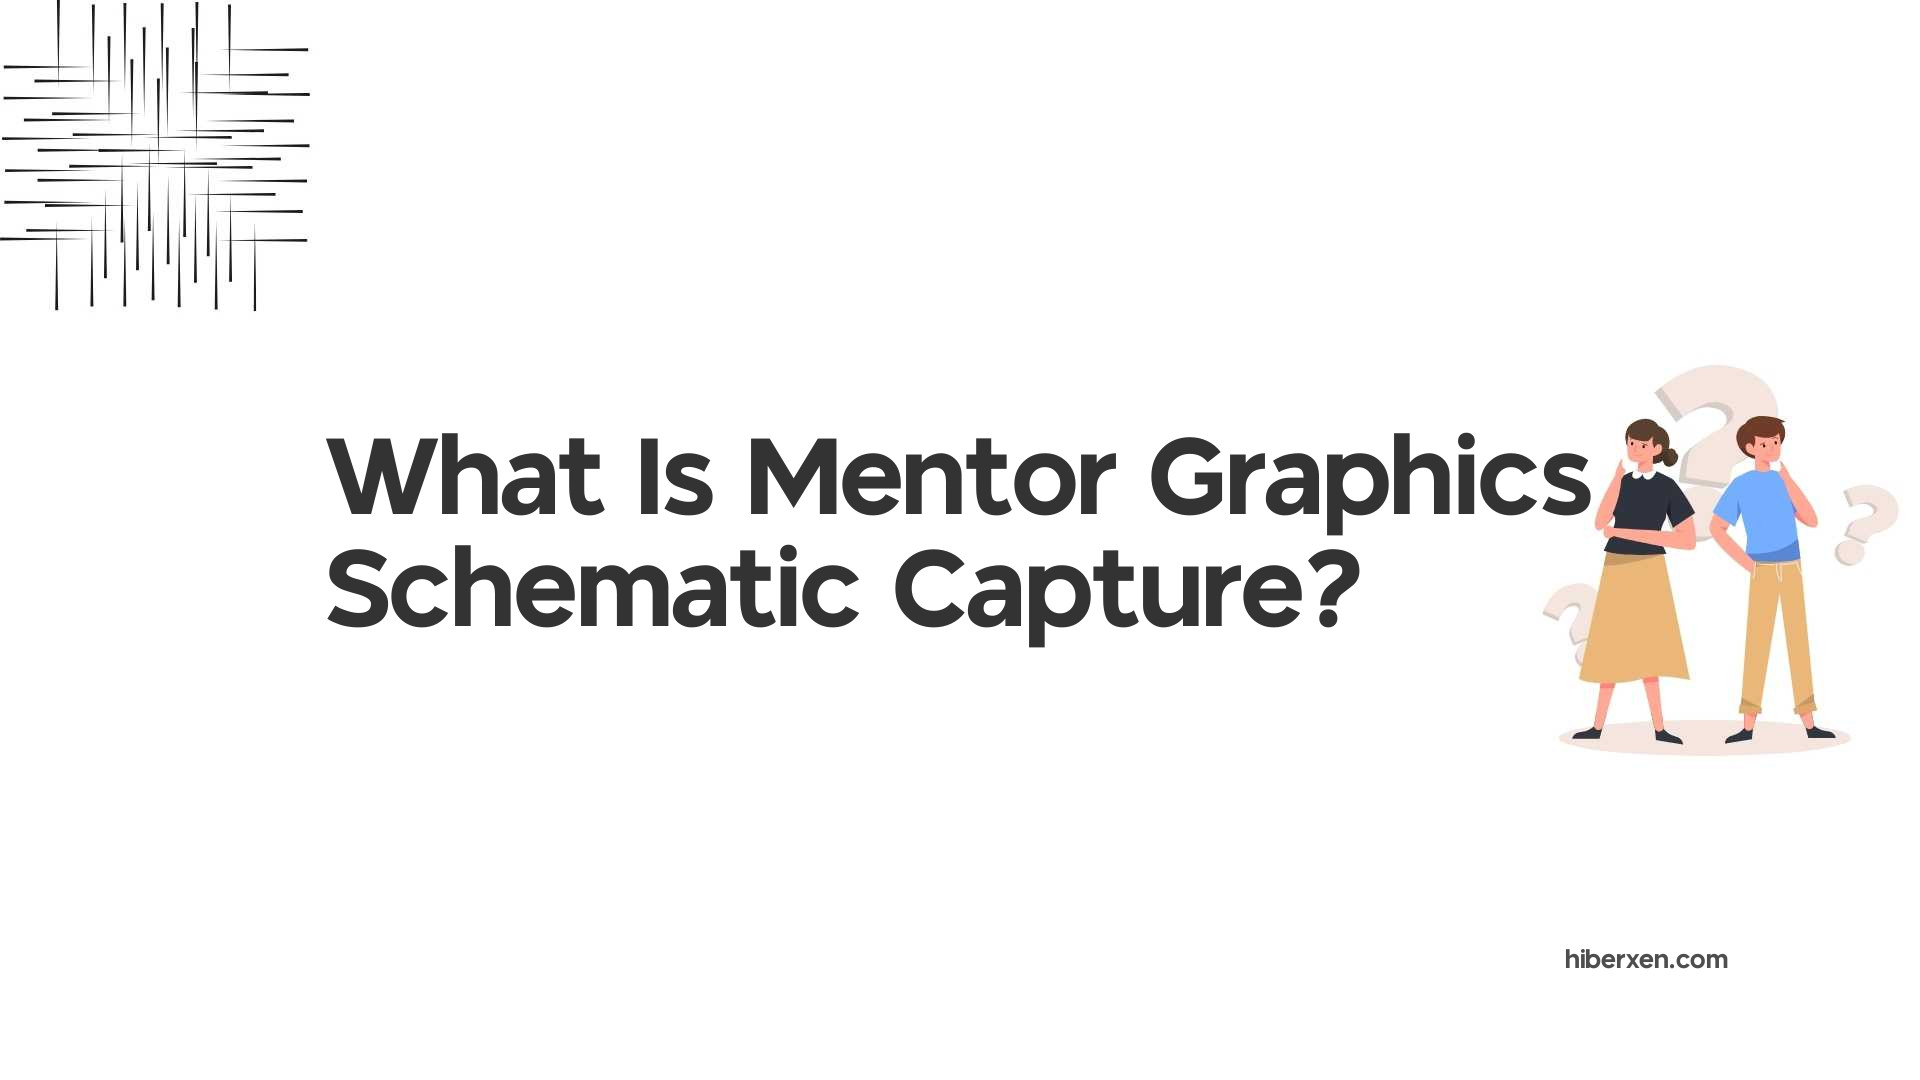 What Is Mentor Graphics Schematic Capture?